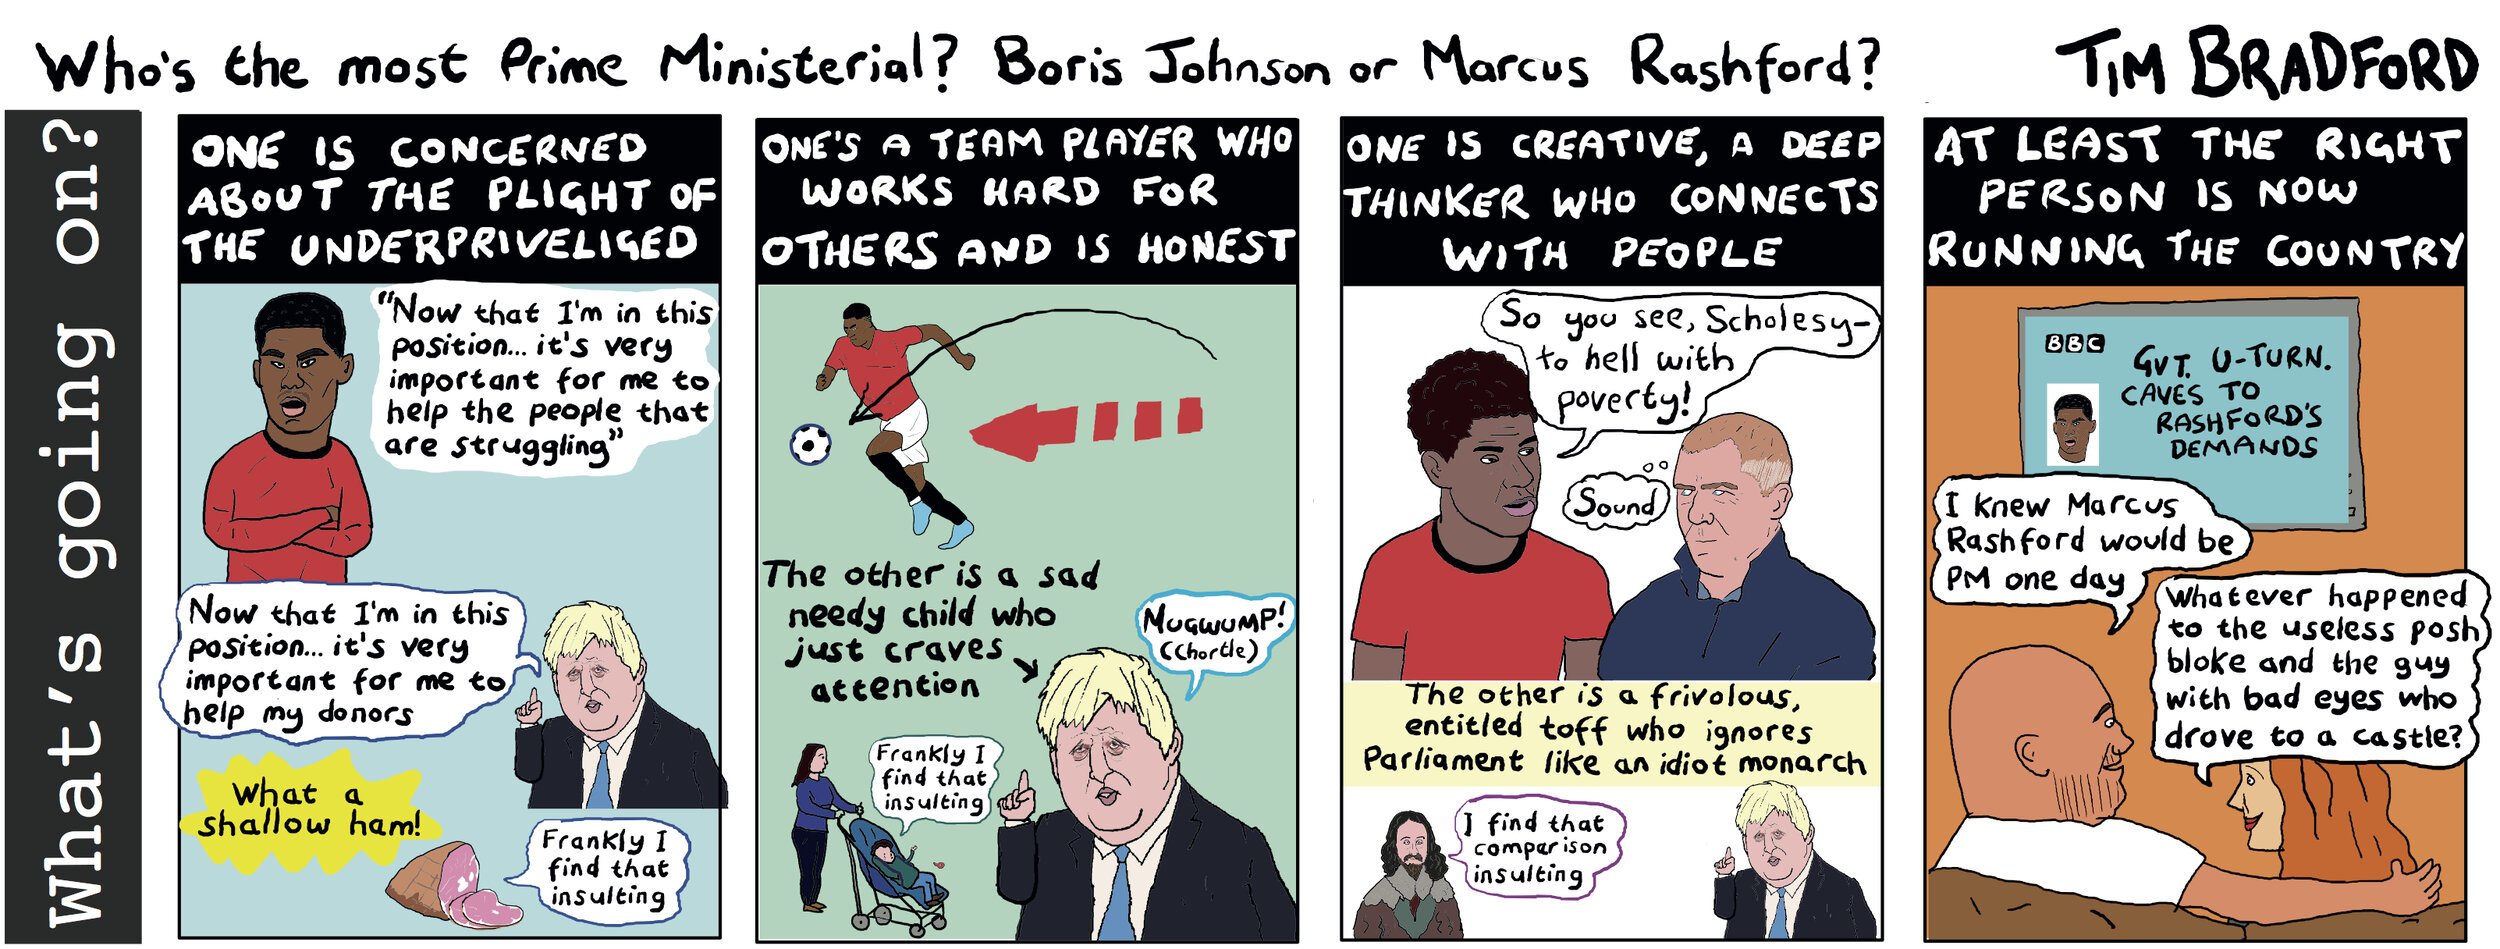 Who's the most prime ministerial? Boris Johnson or Marcus Rashford? - 16/06/2020